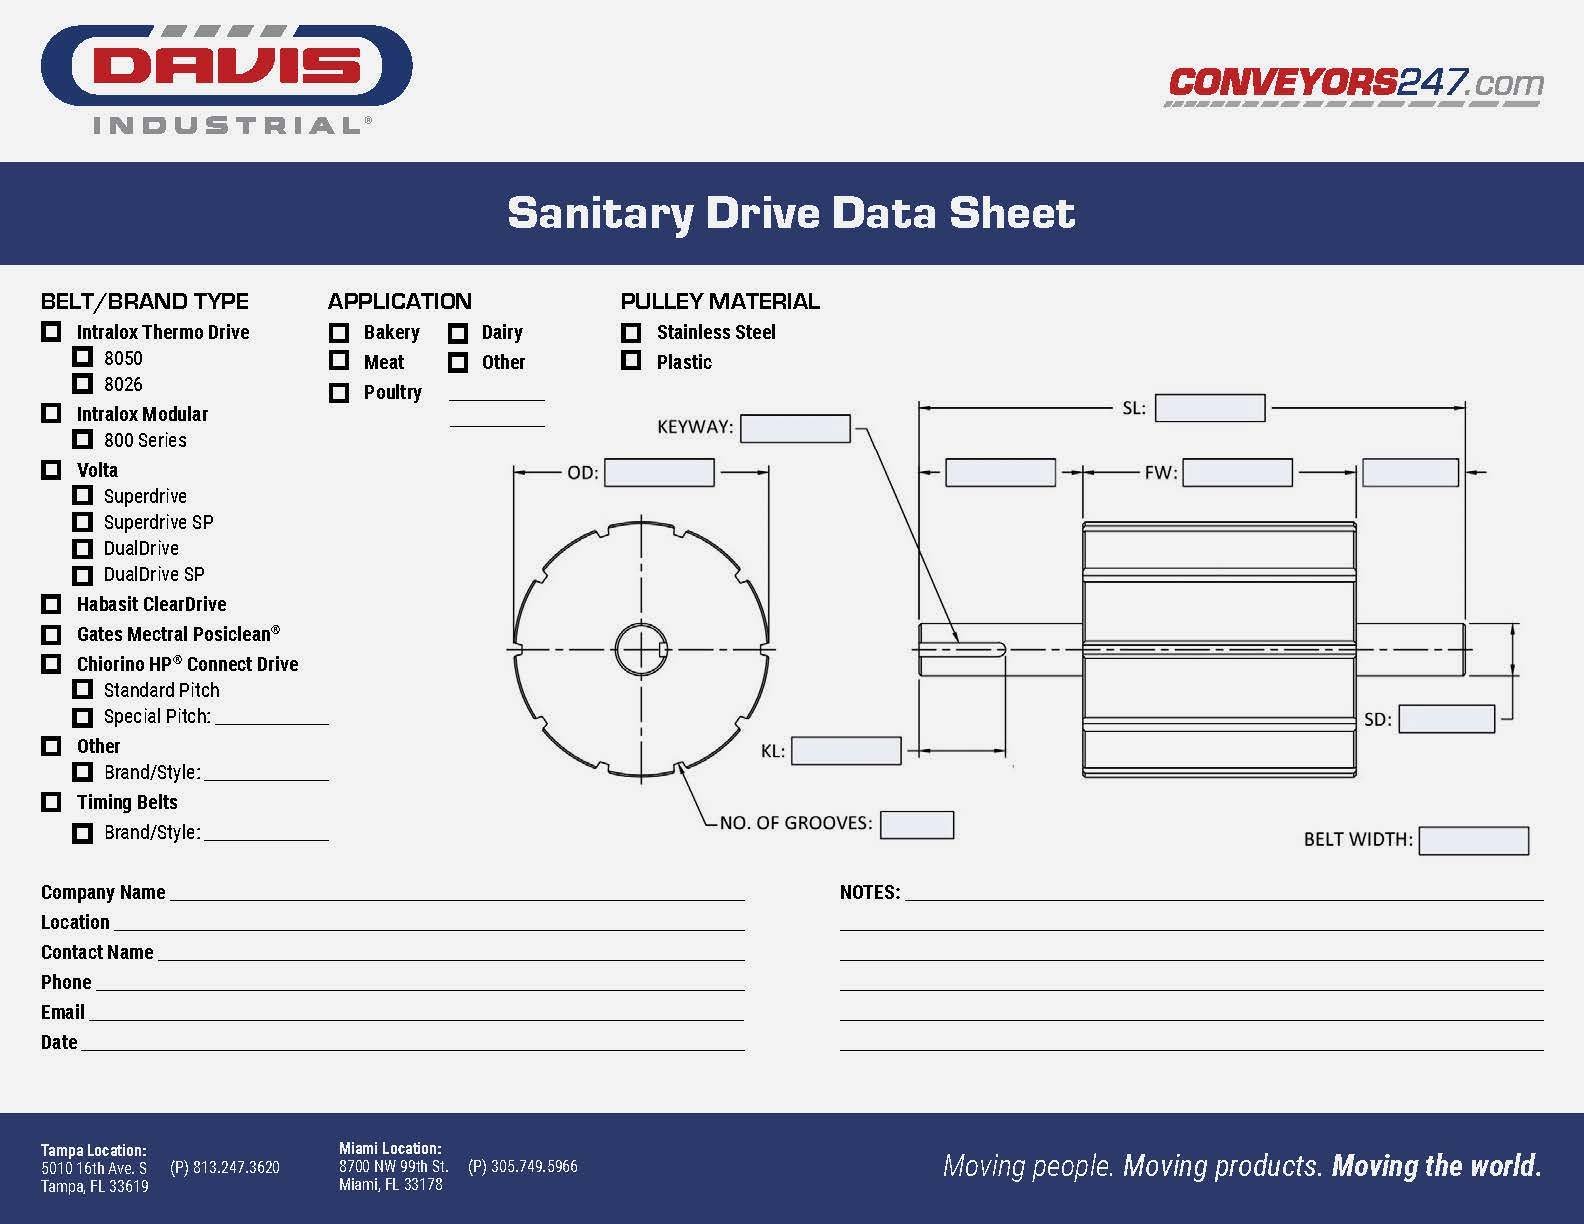 Davis_Sanitary Drive Data Sheet